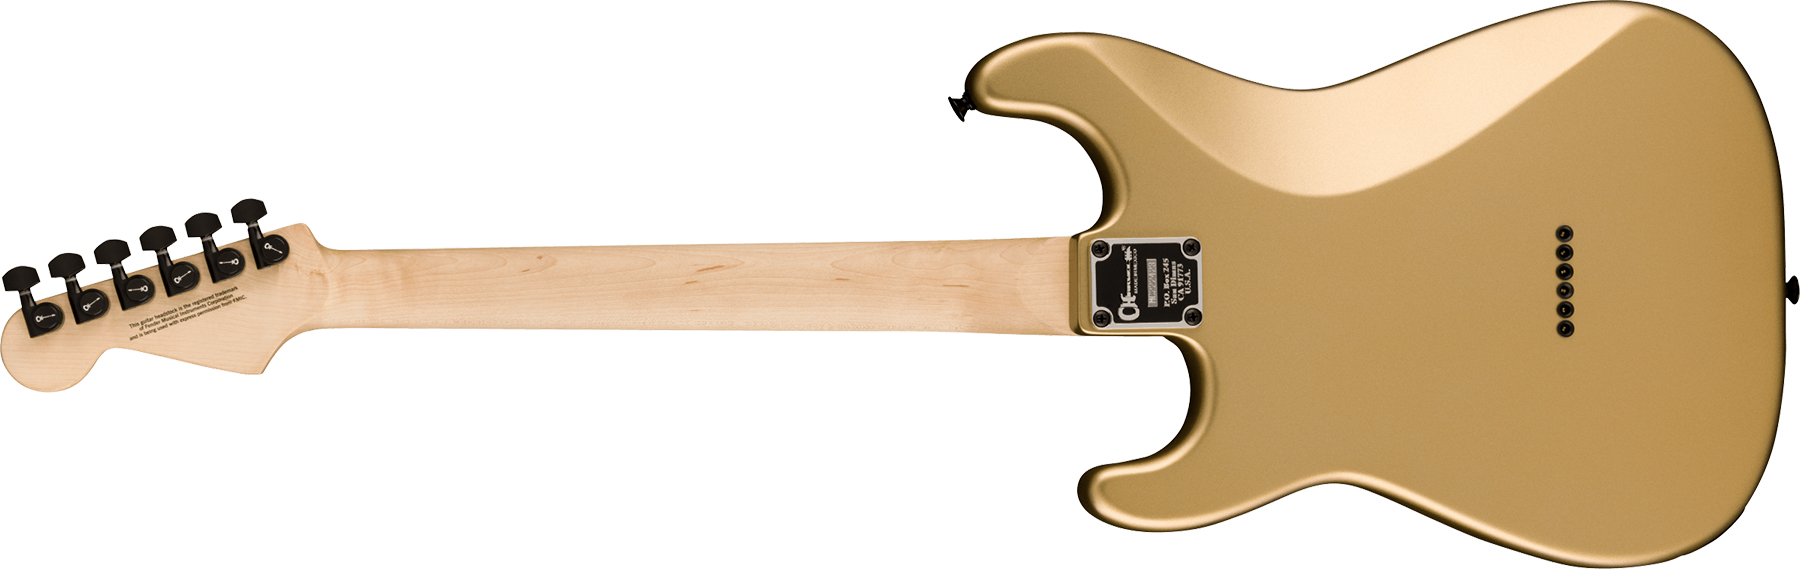 Charvel So-cal Style 1 Hh Ht E Pro-mod 2h Seymour Duncan Eb - Pharaohs Gold - Str shape electric guitar - Variation 1